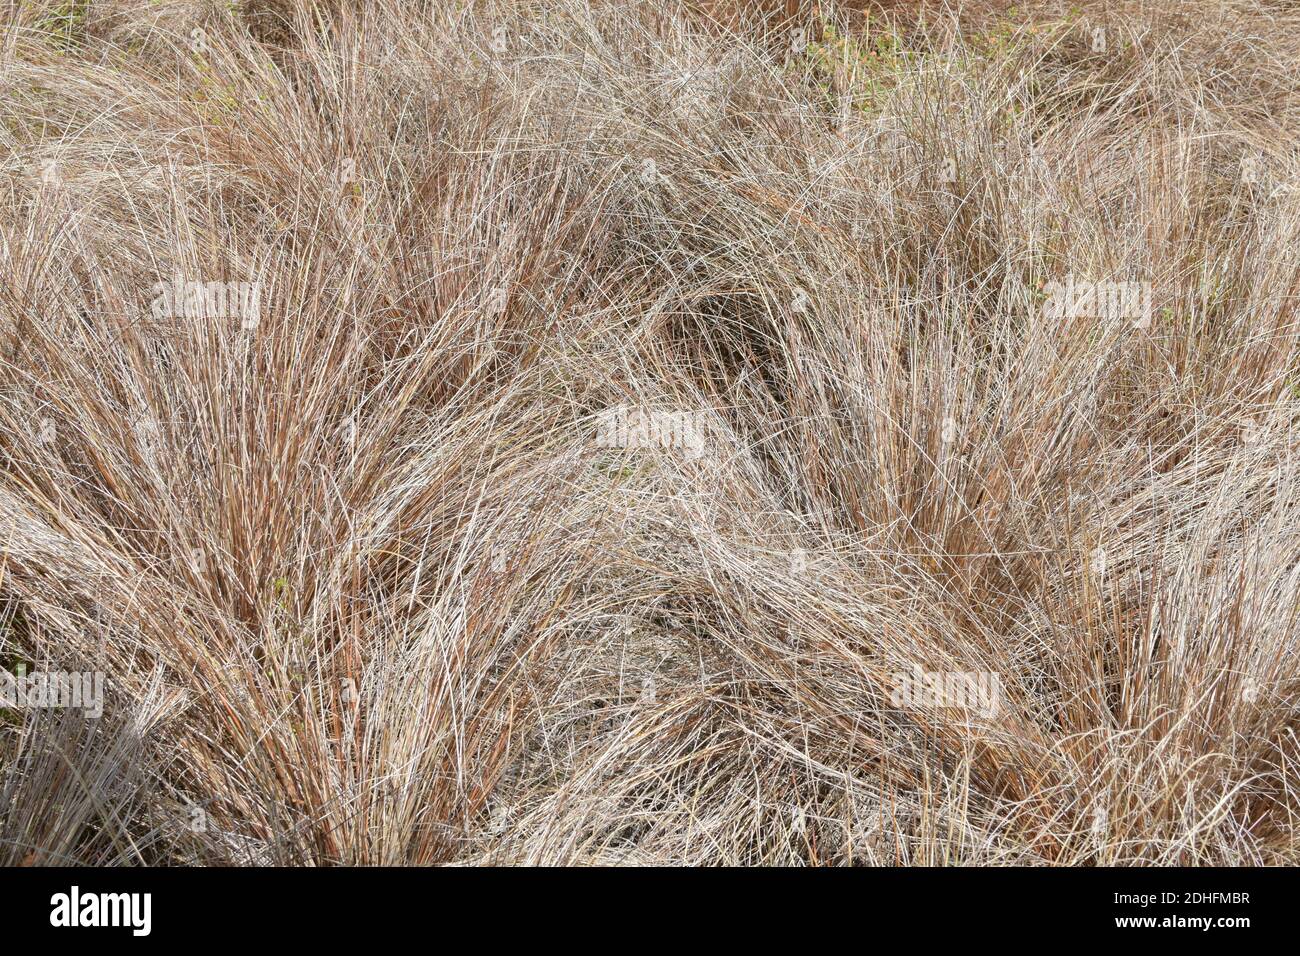 View of New Zealand Hair Sedge (Carex Buchananii) Stock Photo